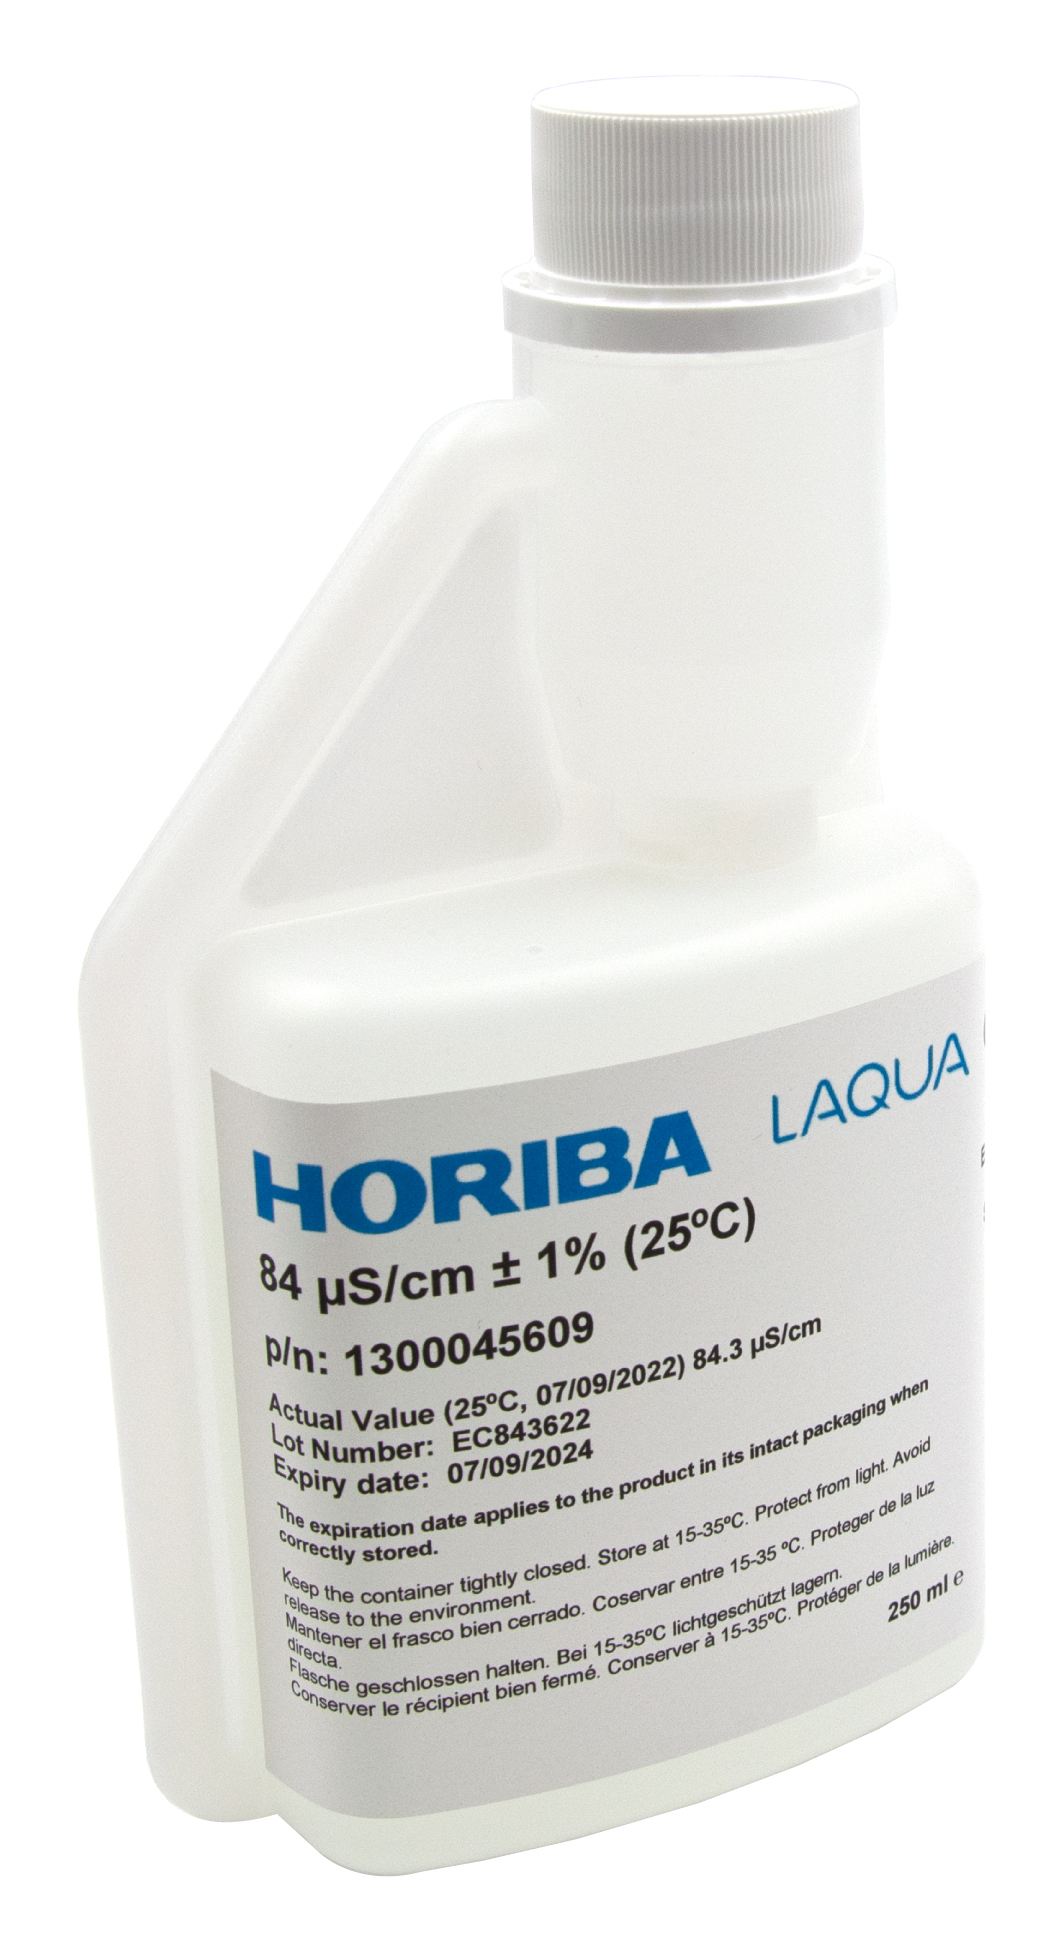 HORIBA 84 μS/cm conductivity calibration solution 250ml (250-EC-84)